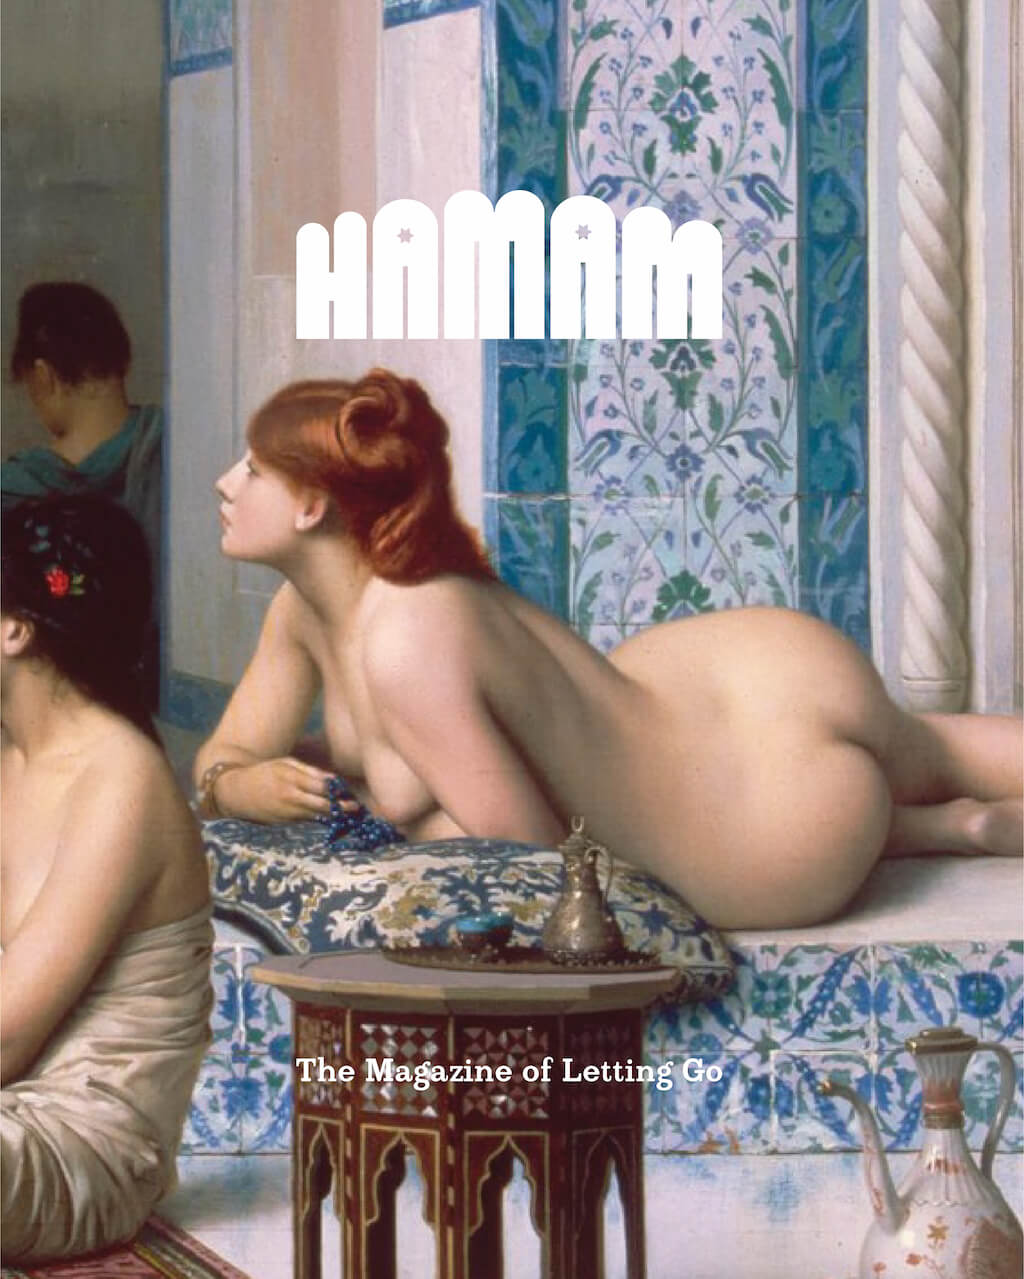 Hamam magazine cover with bather